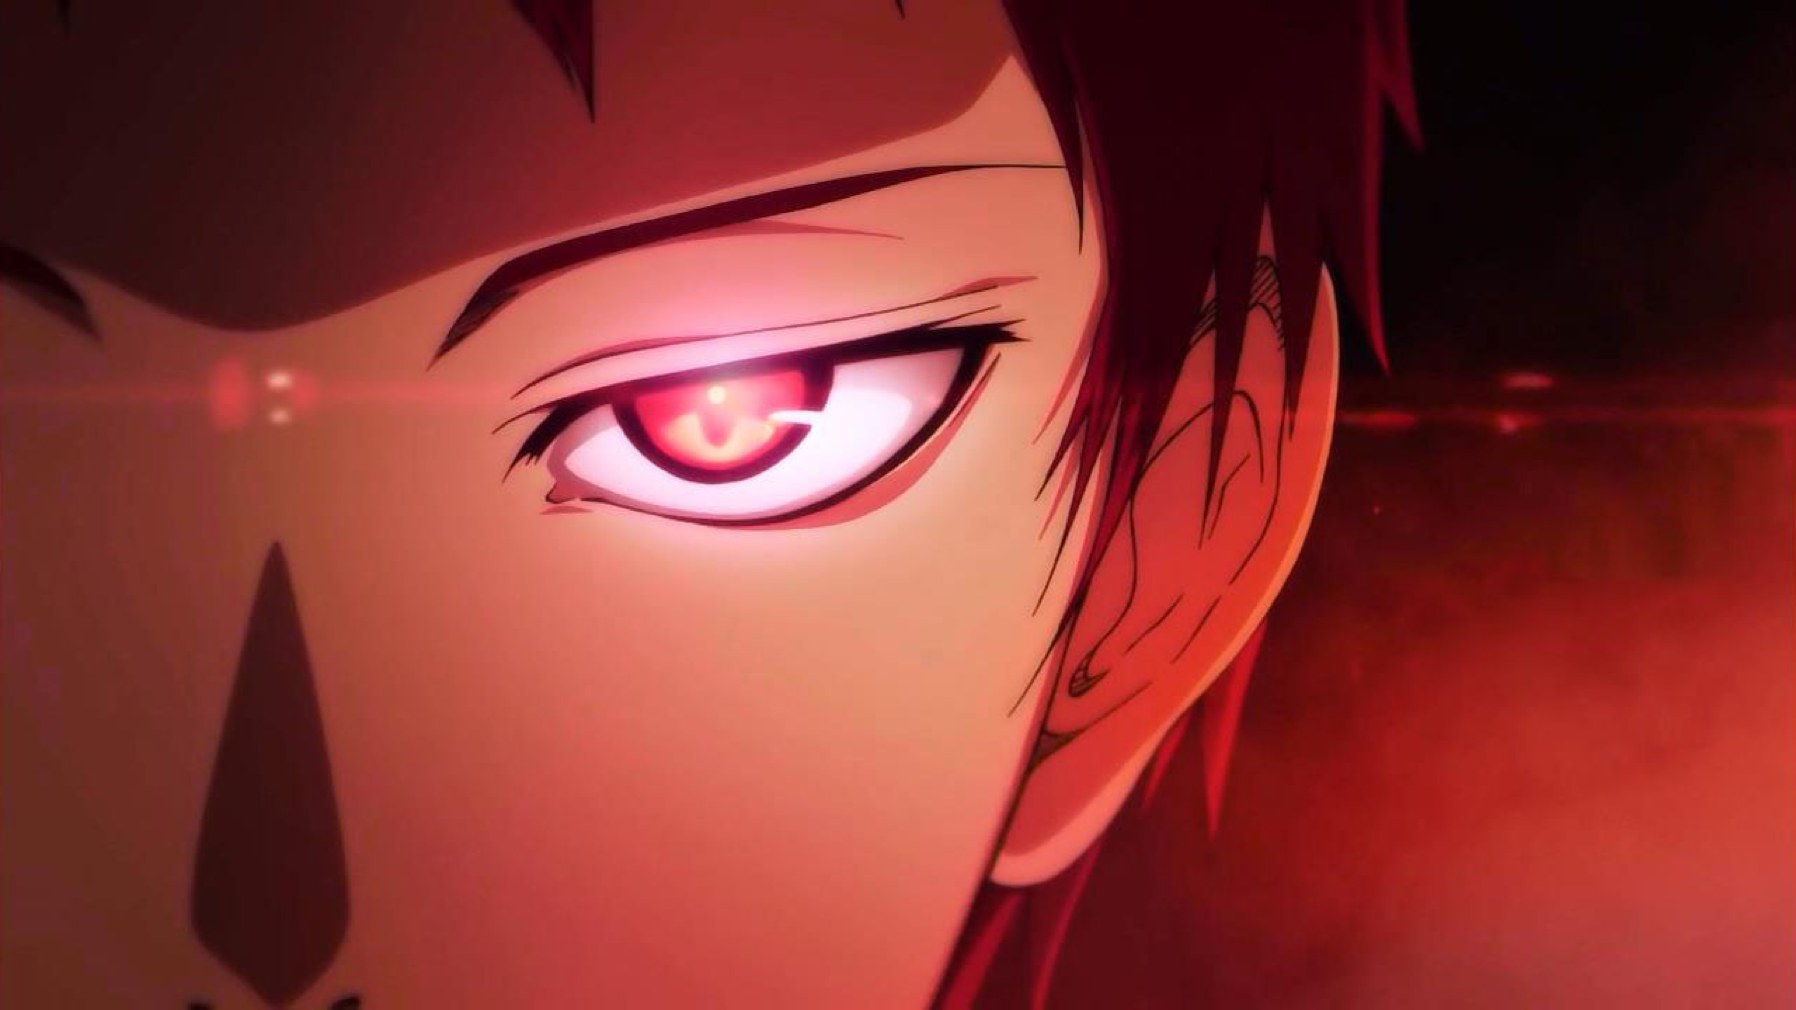 Top 10 Anime Eyes Powers Top 10 Anime Eyes Powers  Hey guys  by  Animesoulking  Medium